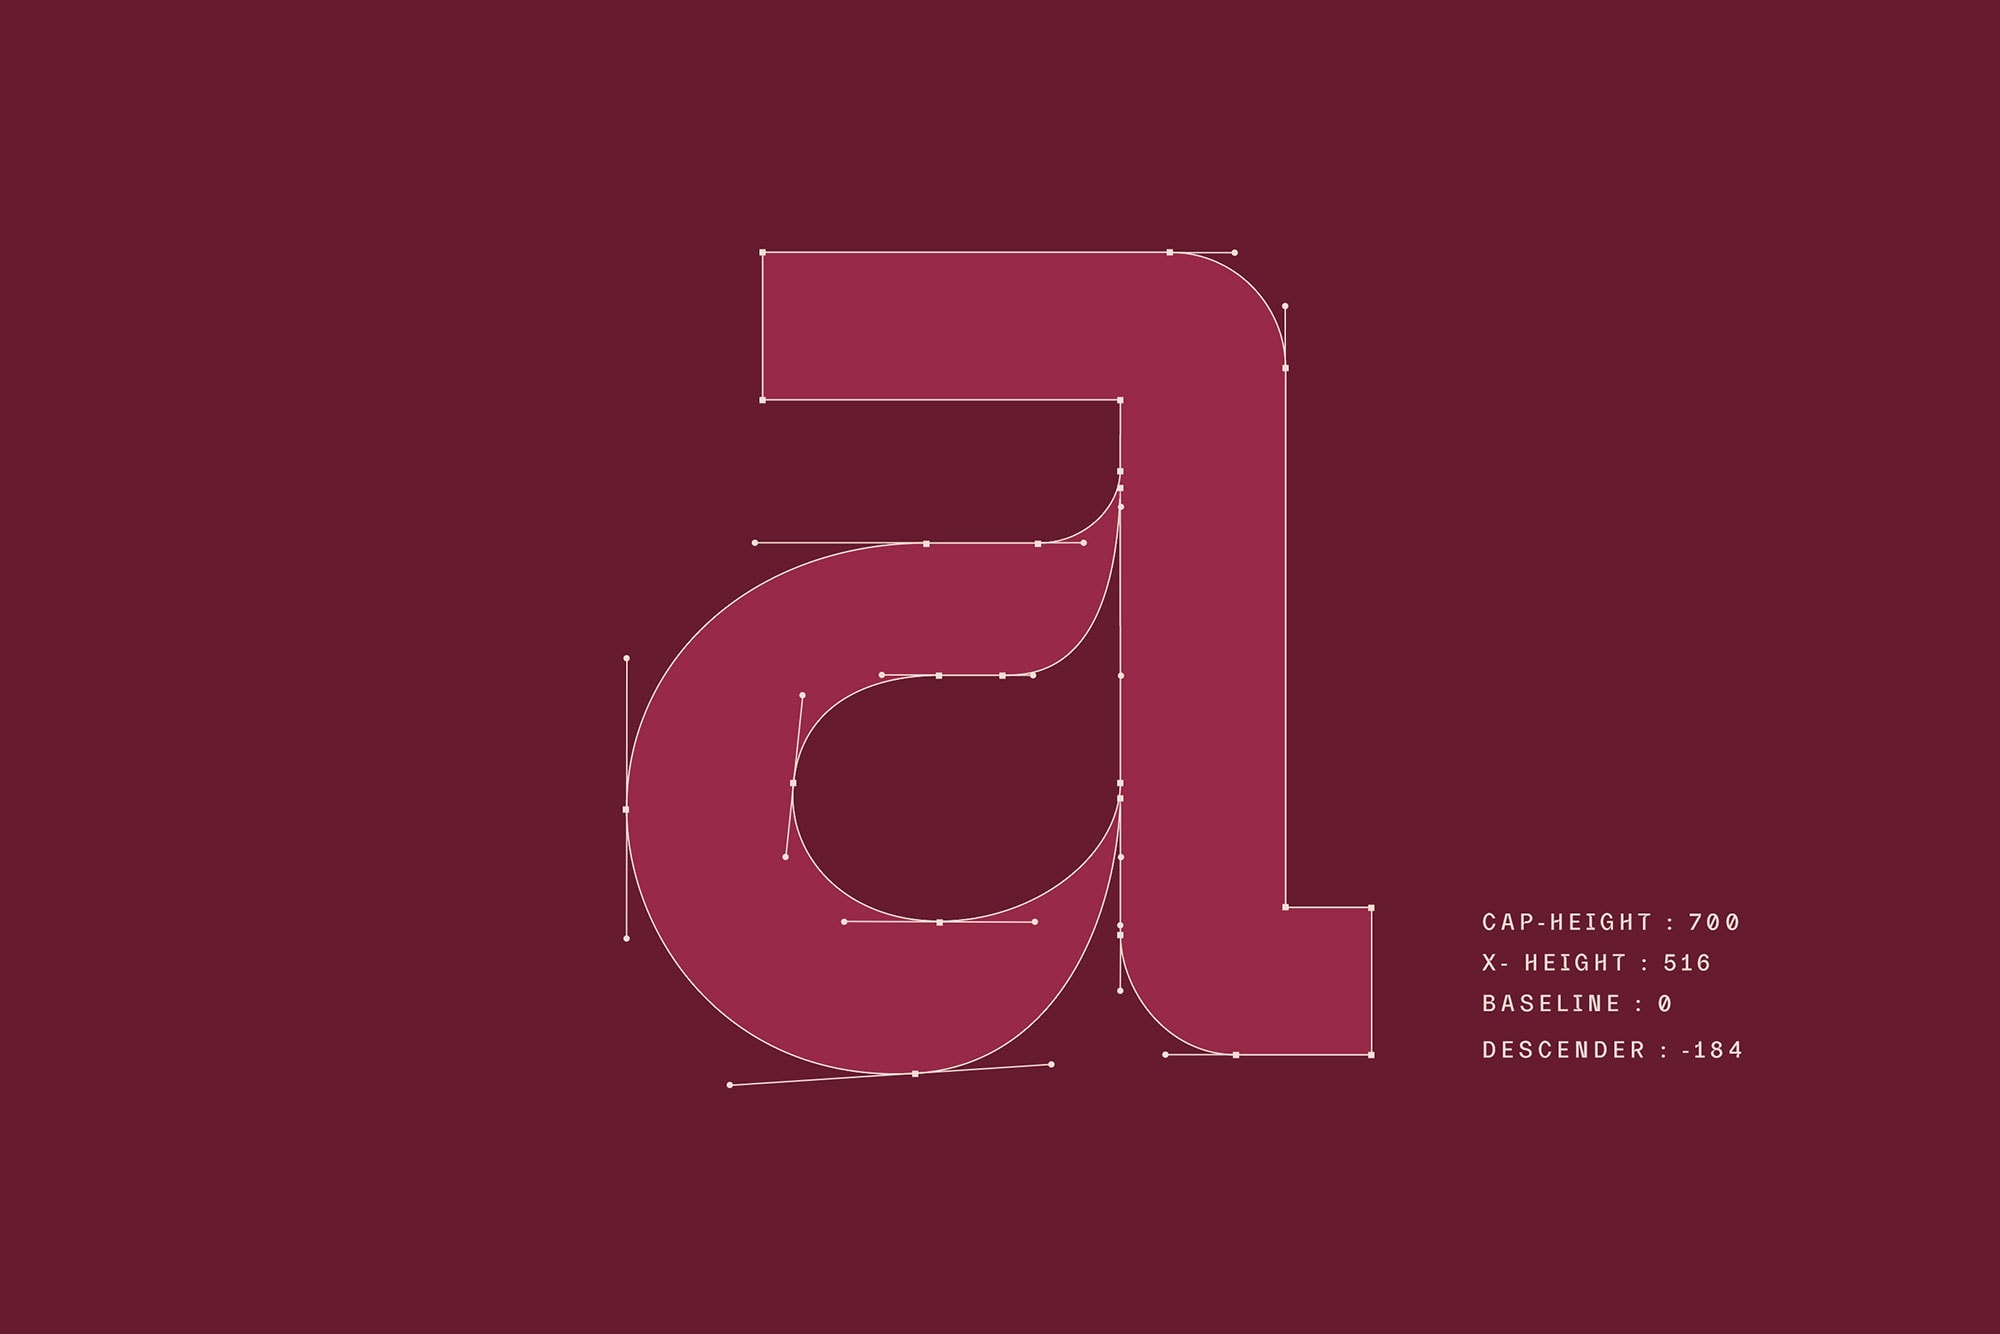 monospaced almarena typeface